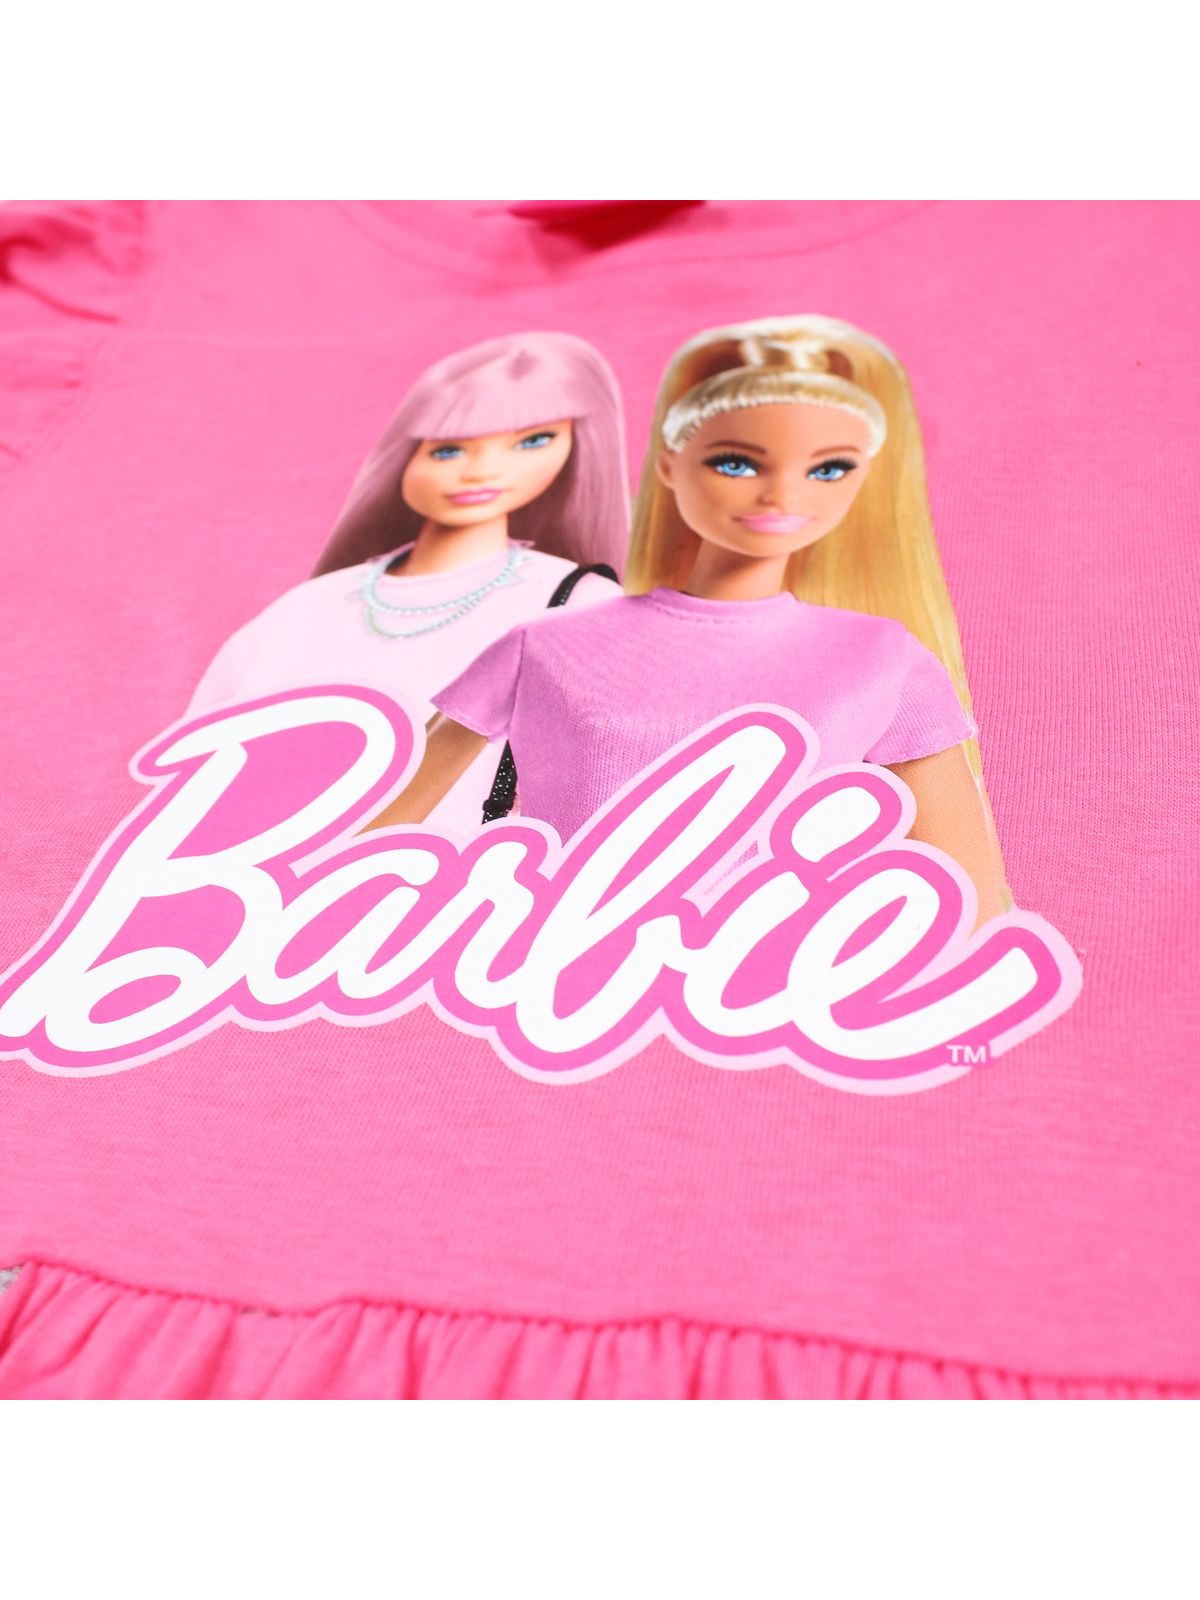 Abito Barbie.